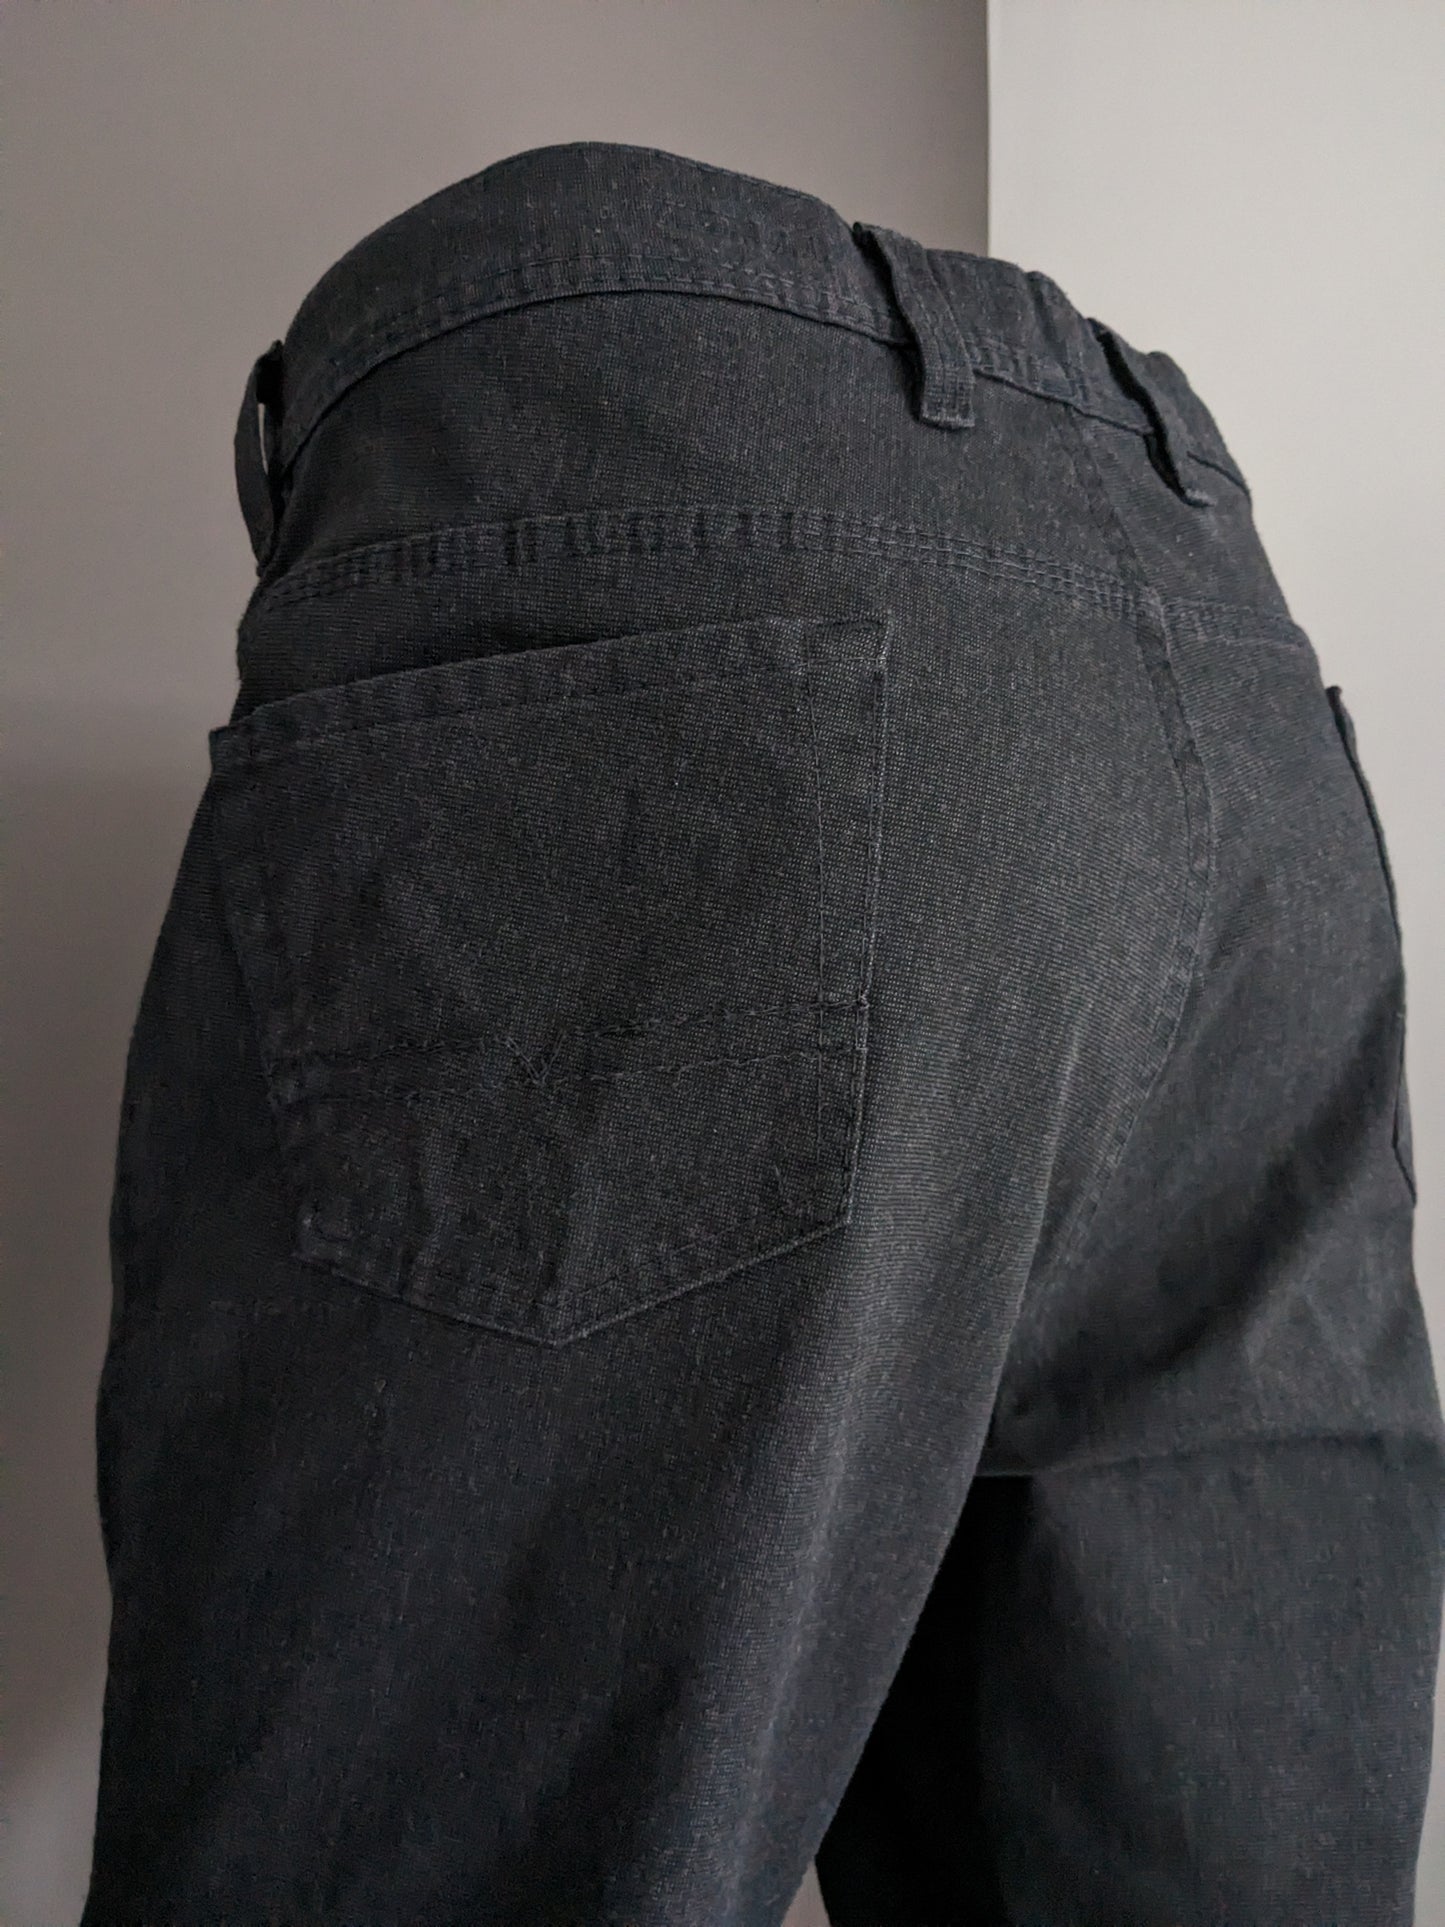 Pantalones pioneros. Motivo negro gris. Tamaño 58 / xl. Escriba Thomas.